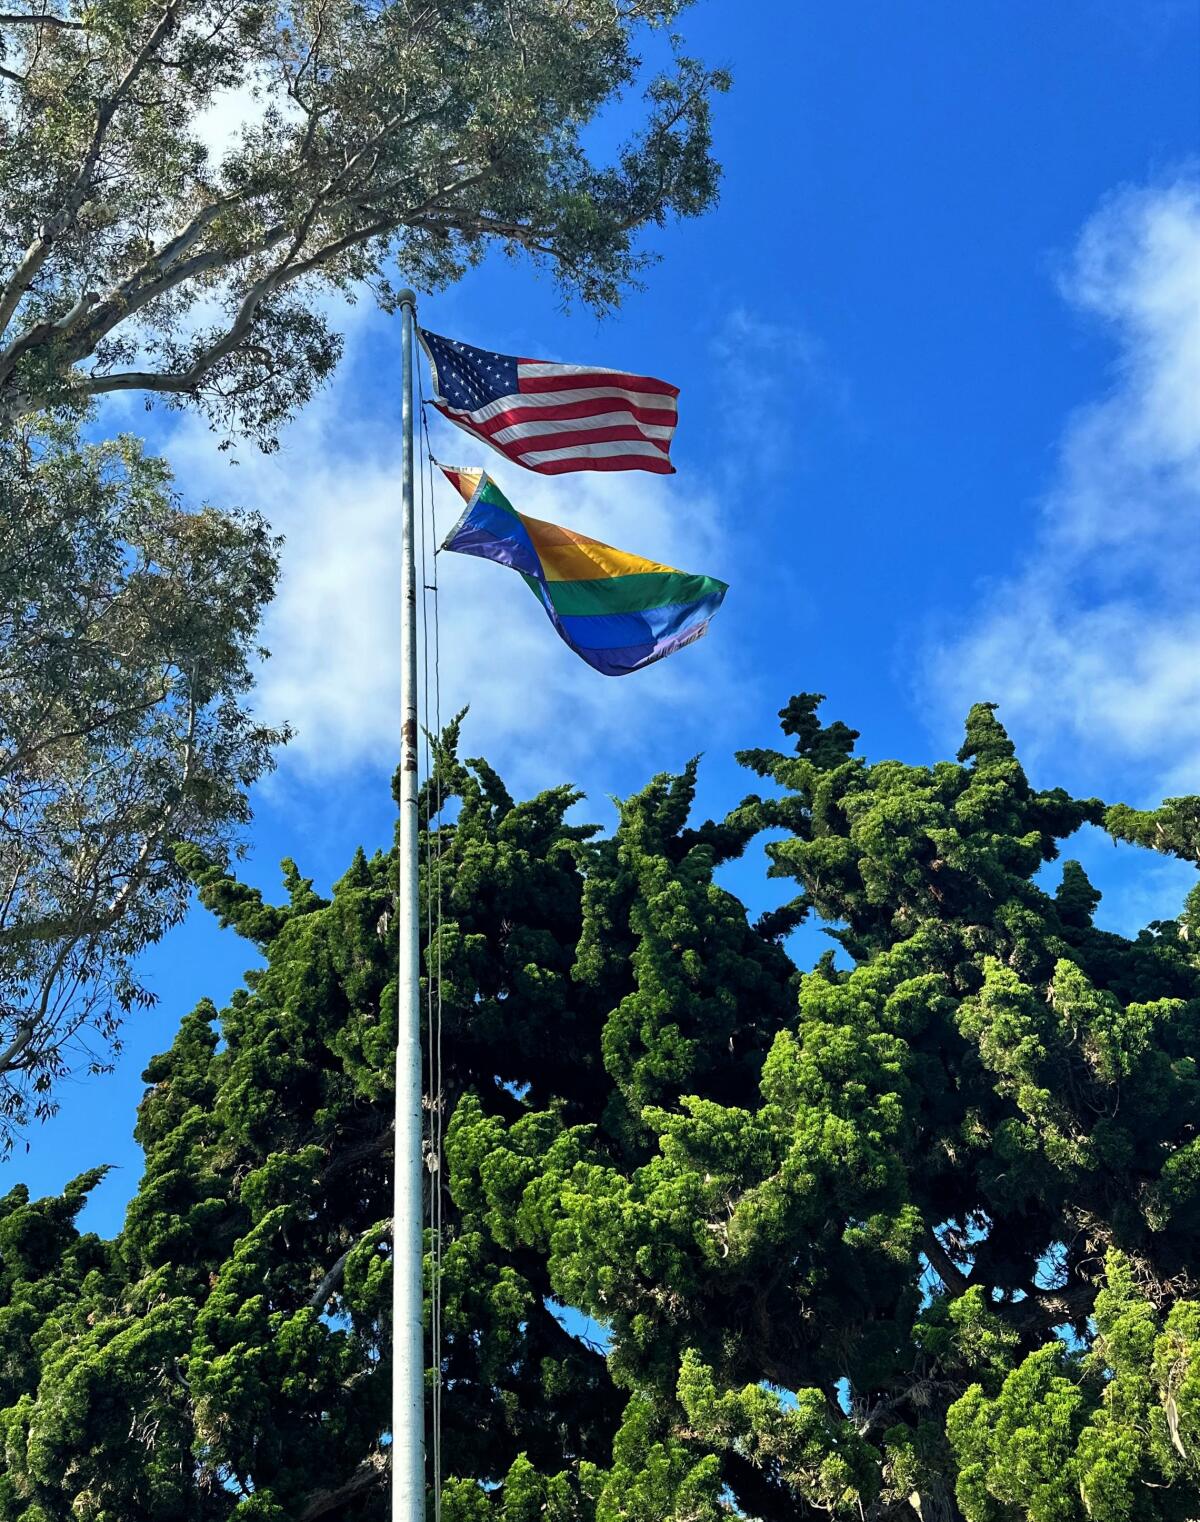 The LGBTQ+ Pride flag flies Wednesday outside Laguna Beach City Hall.